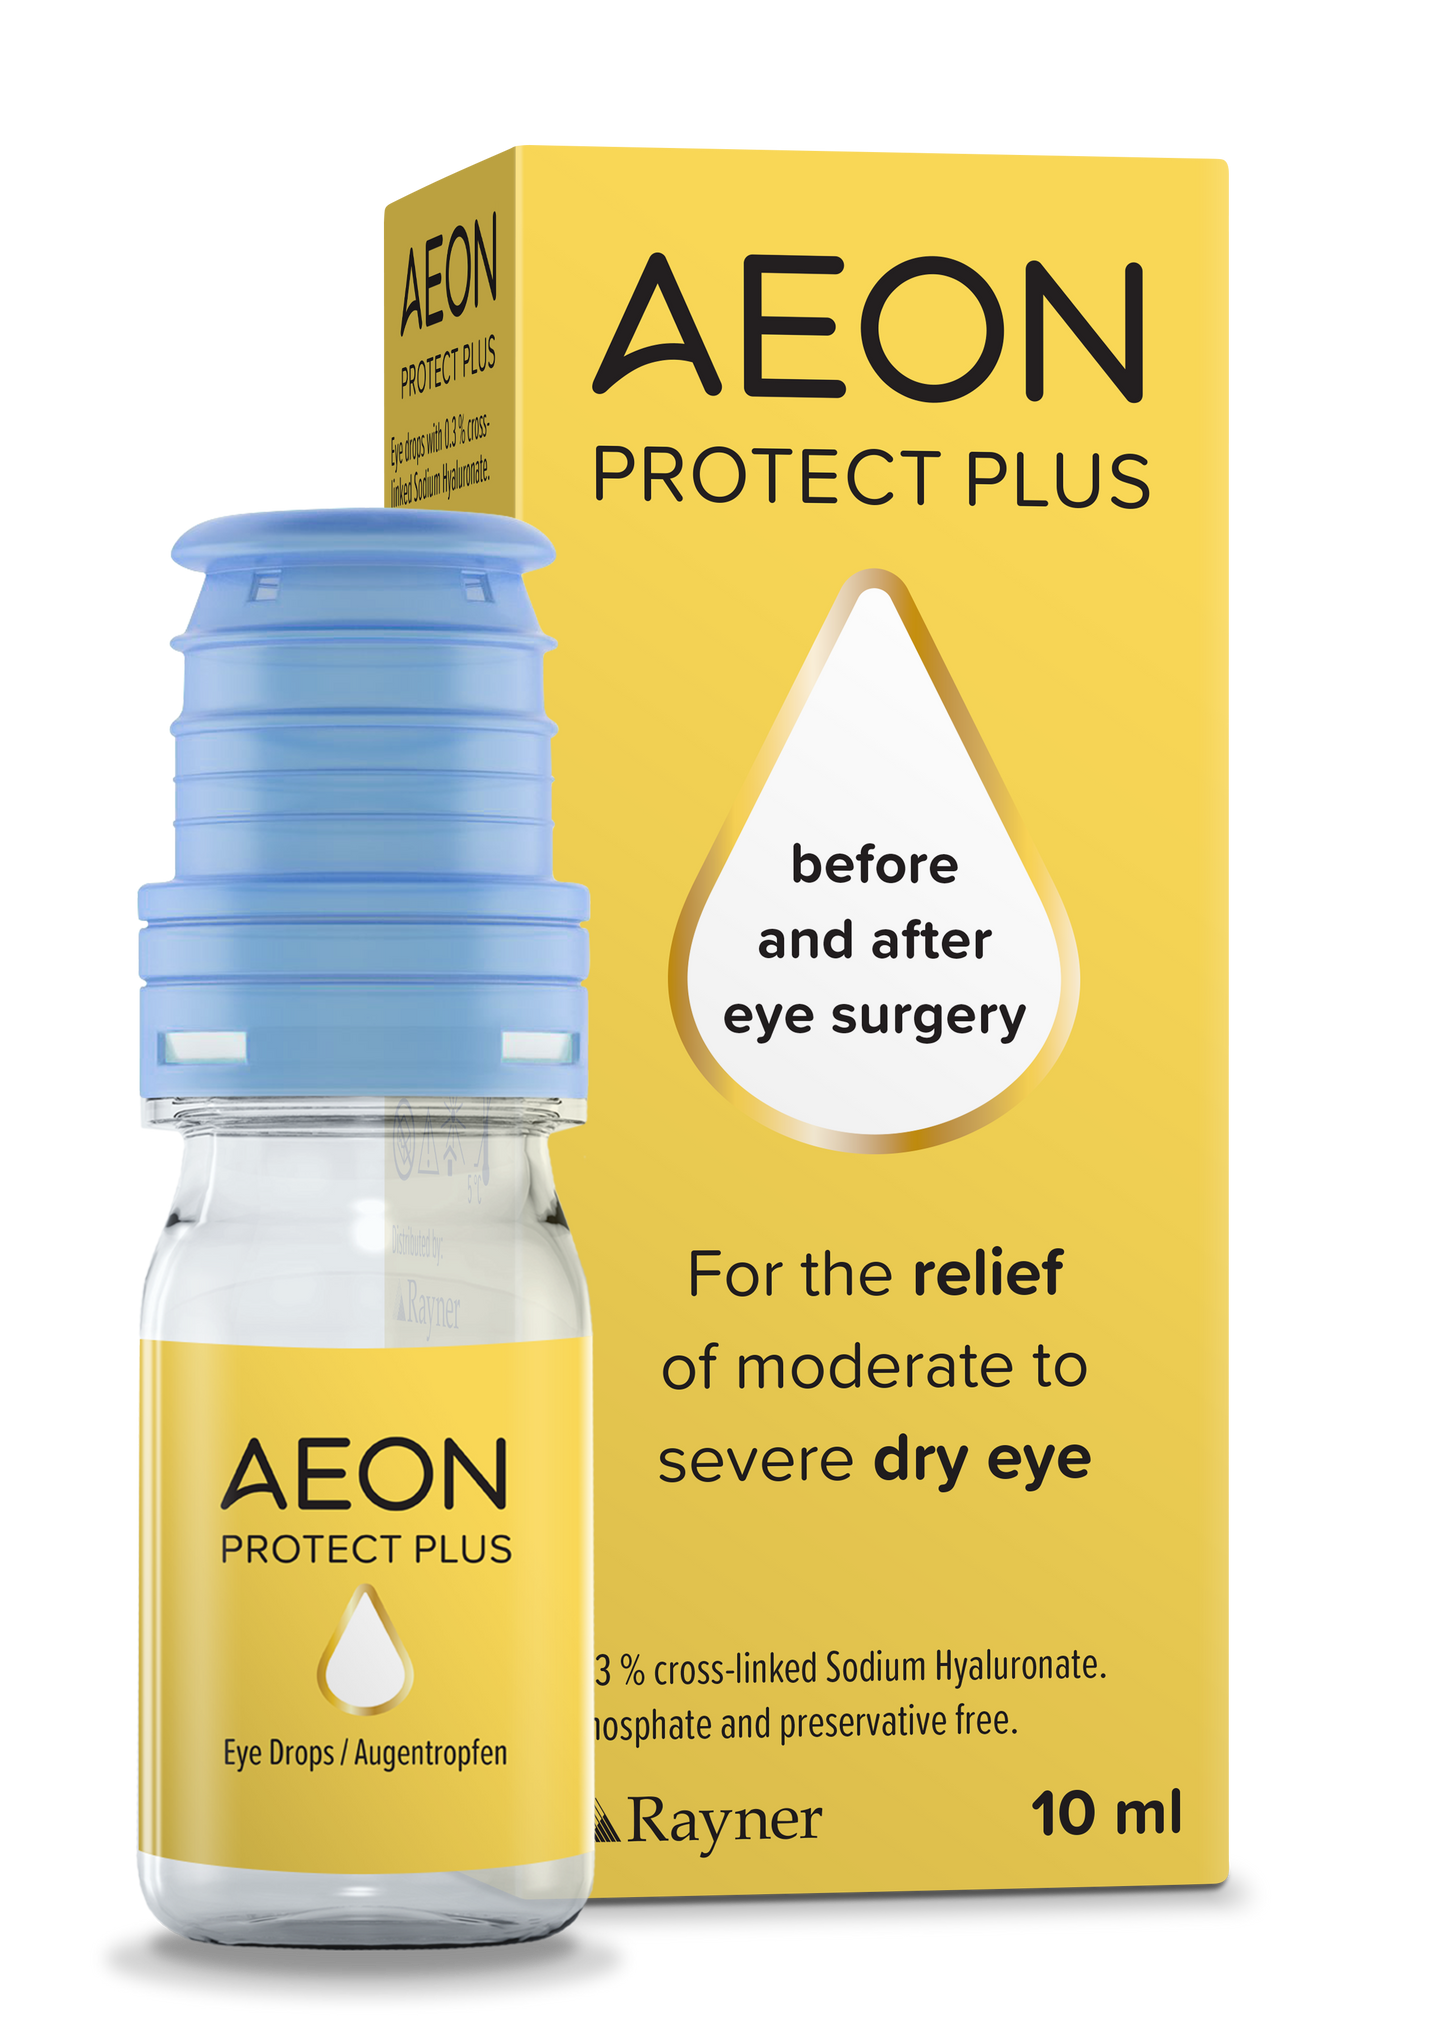 AEON PROTECT PLUS Lubricating Eye Drops